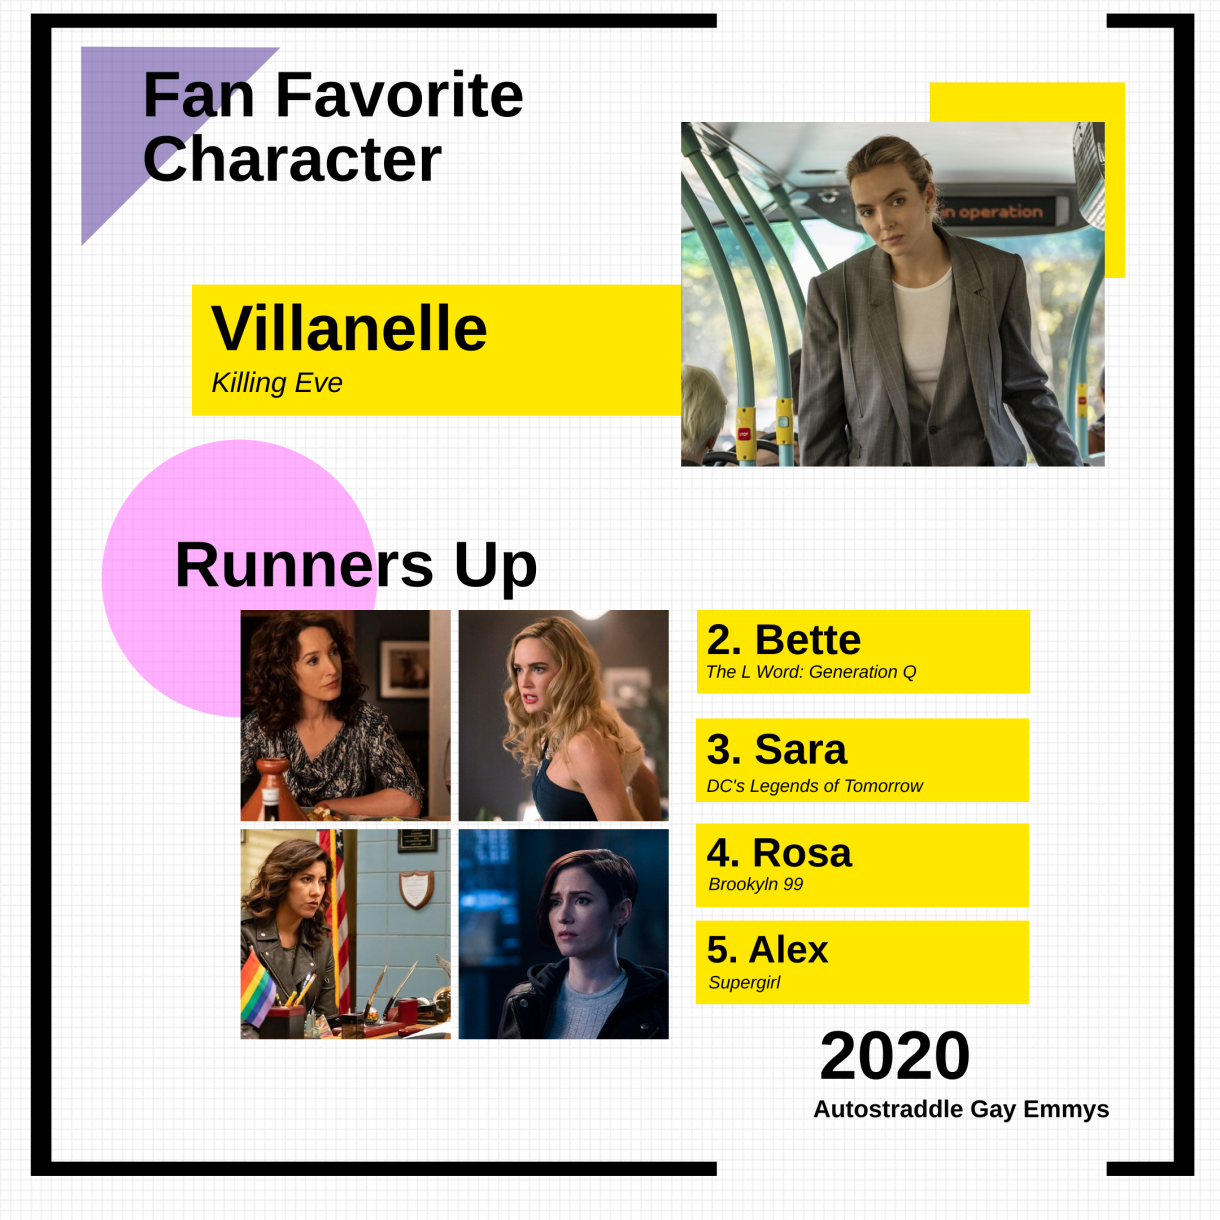 Graphic of Fan Favorite Character Winners: 1. Villanelle (Killing Eve), 2. Bette Porter (The L Word: Generation Q), 3. Sara (DC Legends of Tomorrow), 4. Rosa (Brooklyn 99), 5. Alex (Supergirl)